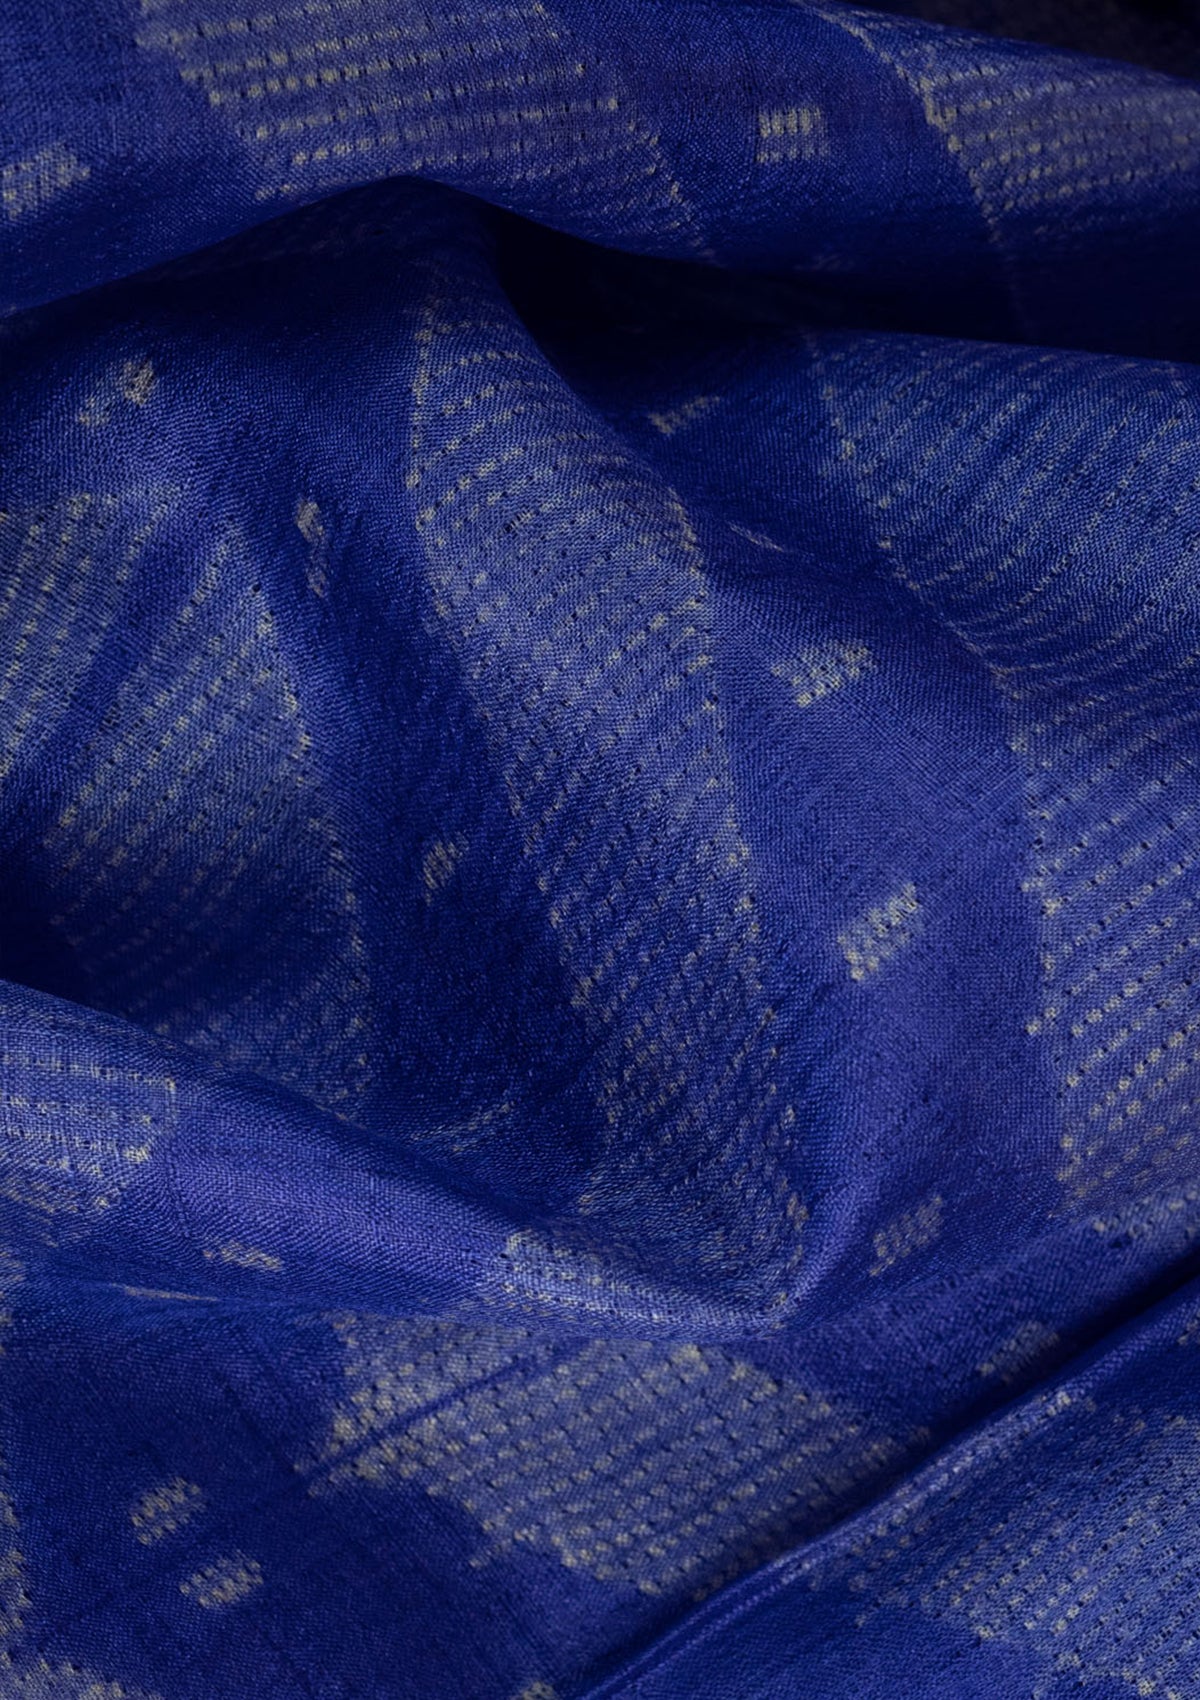 Handwoven Dark Blue Shibori Fabric